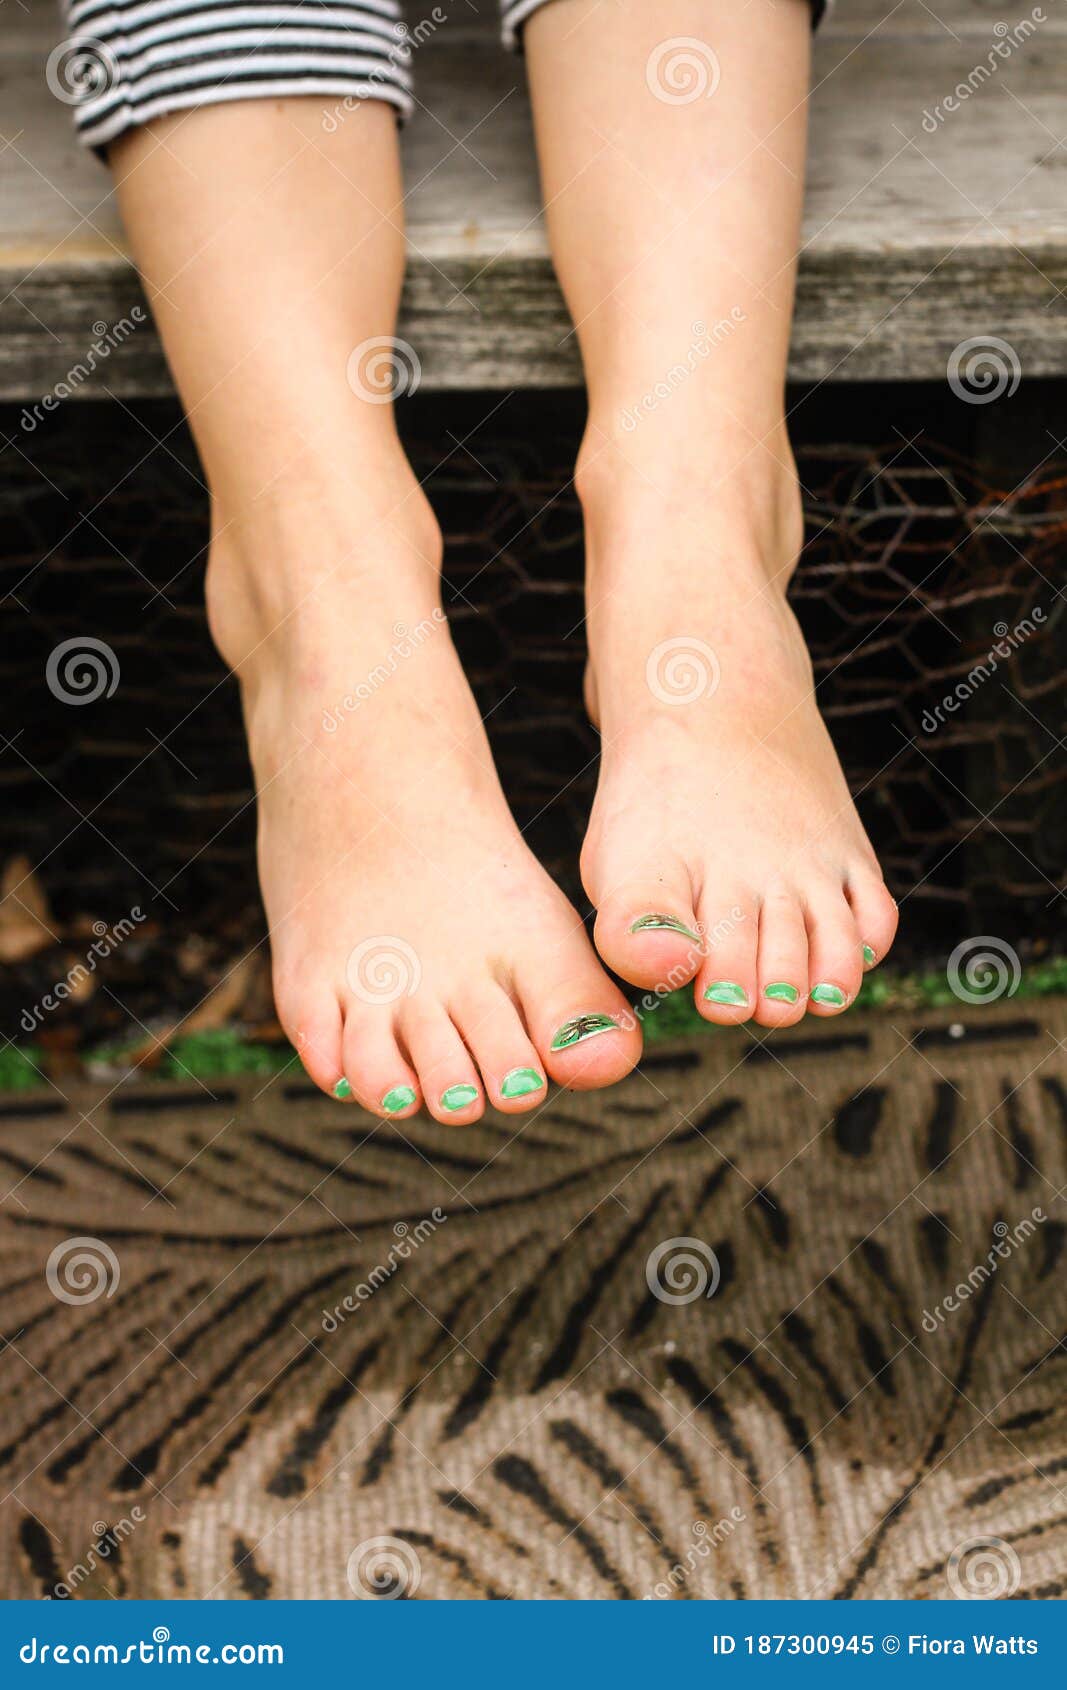 Painted Toes In High Heels